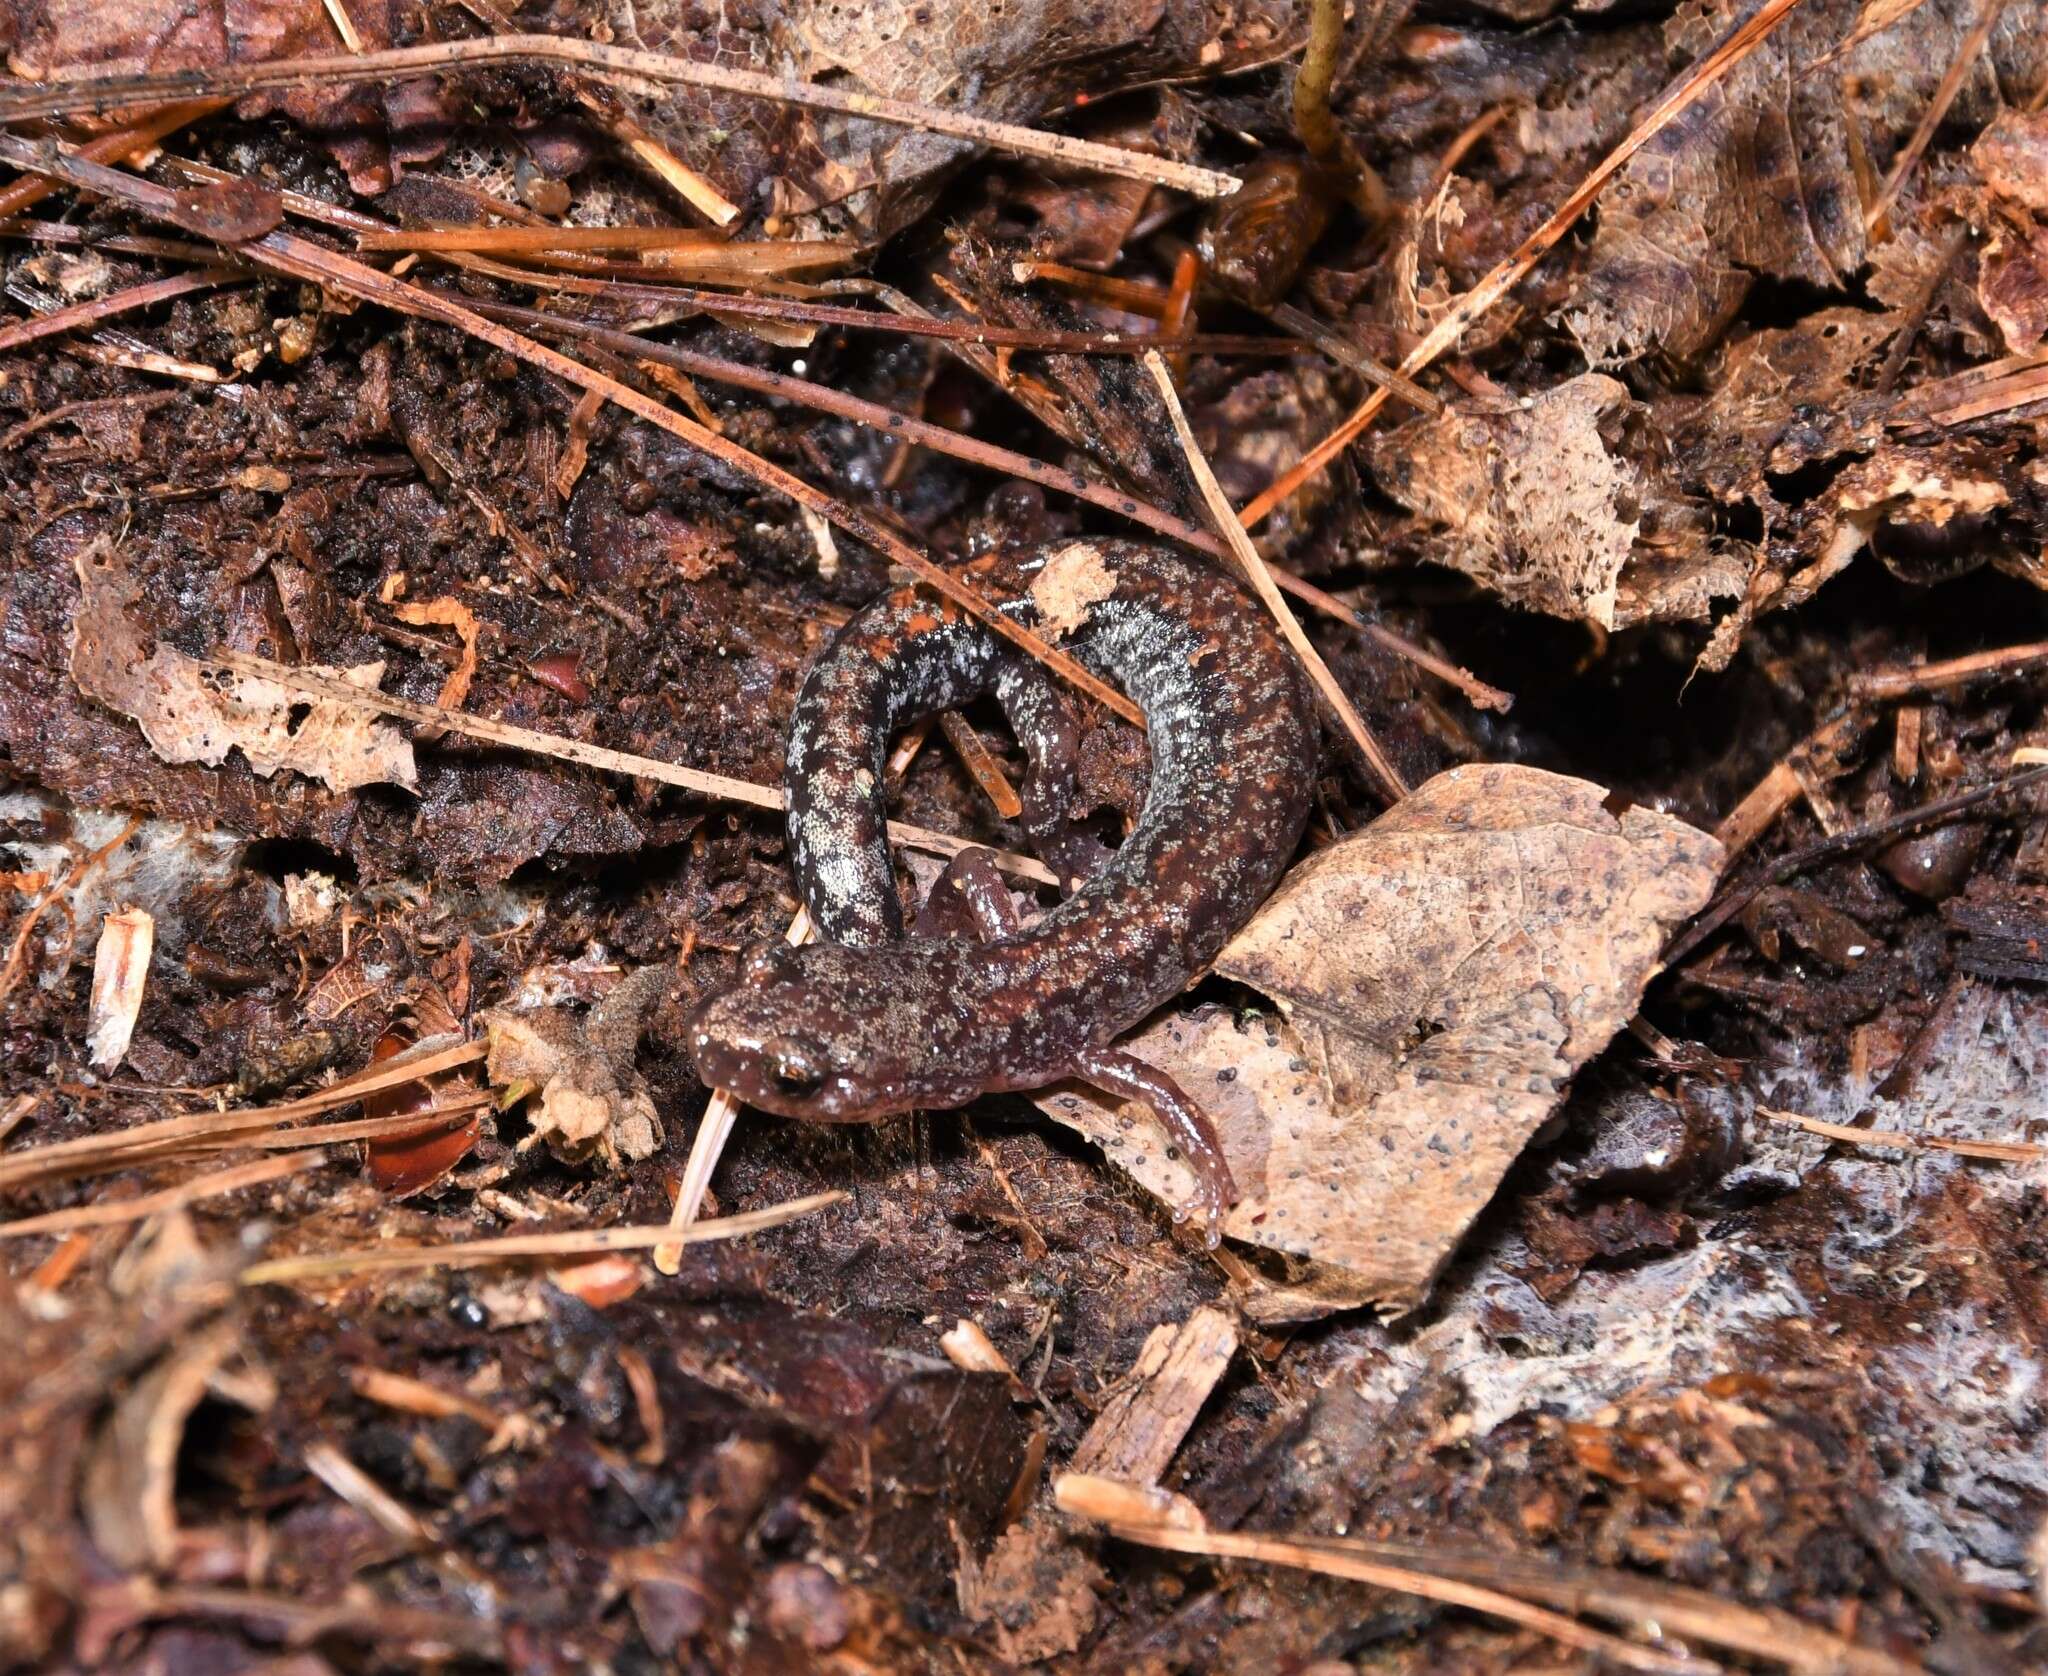 Image of Big Levels Salamander